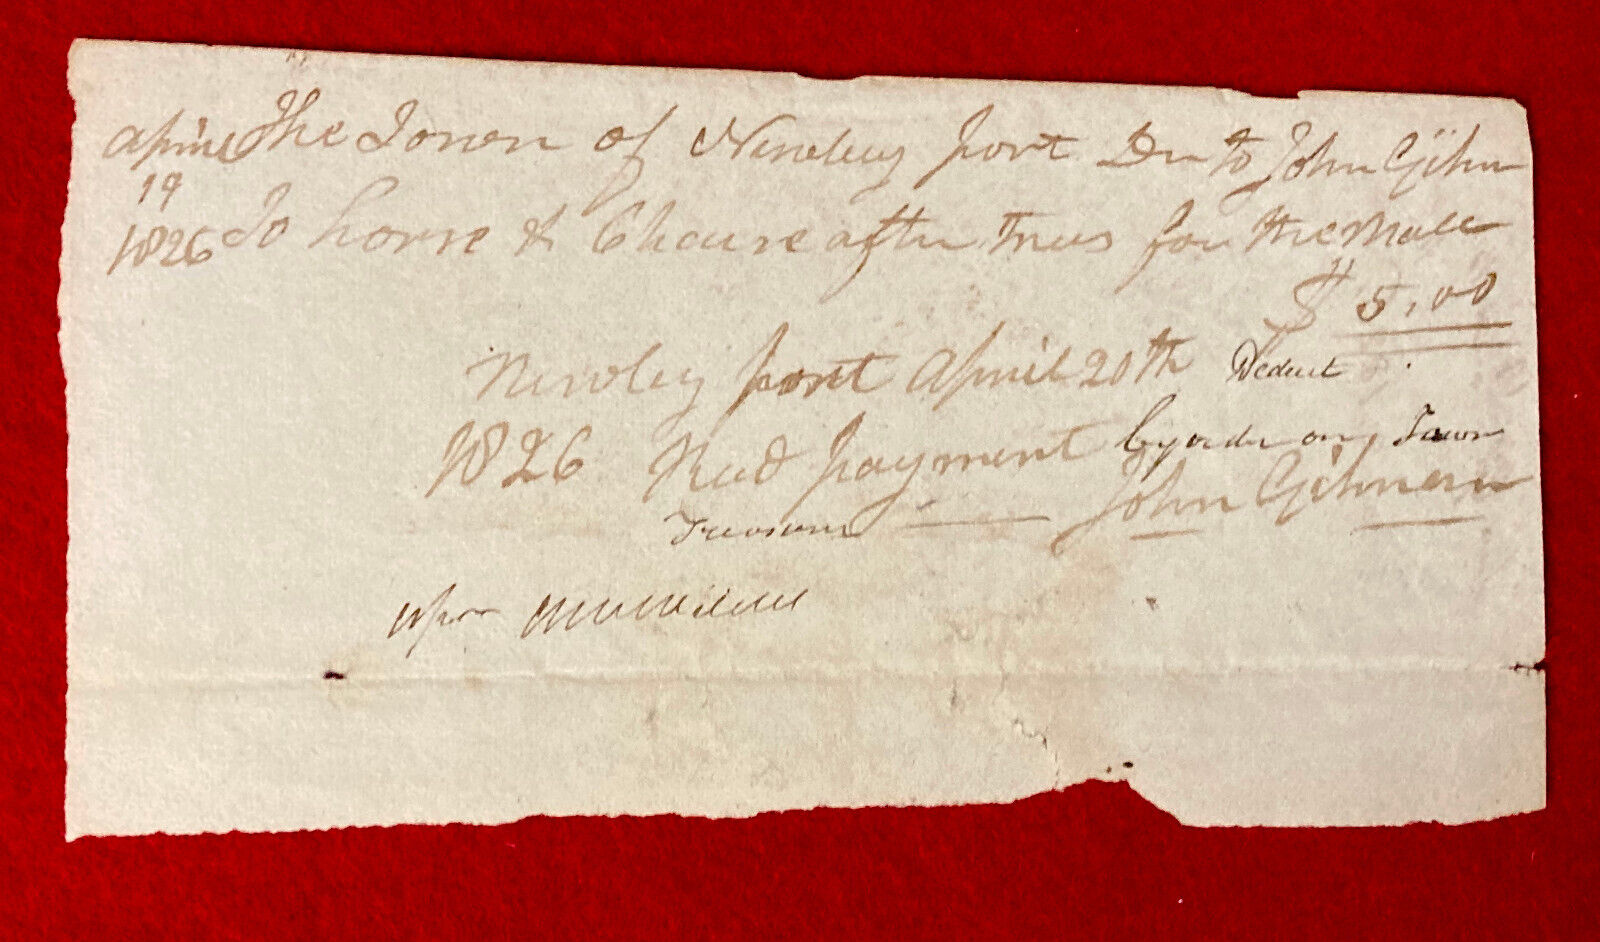 RARE 1826 HAND WRITTEN $5 DOLLAR CHECK FOUND IN ESTATE IN GLOUCESTER, VIRGINIA